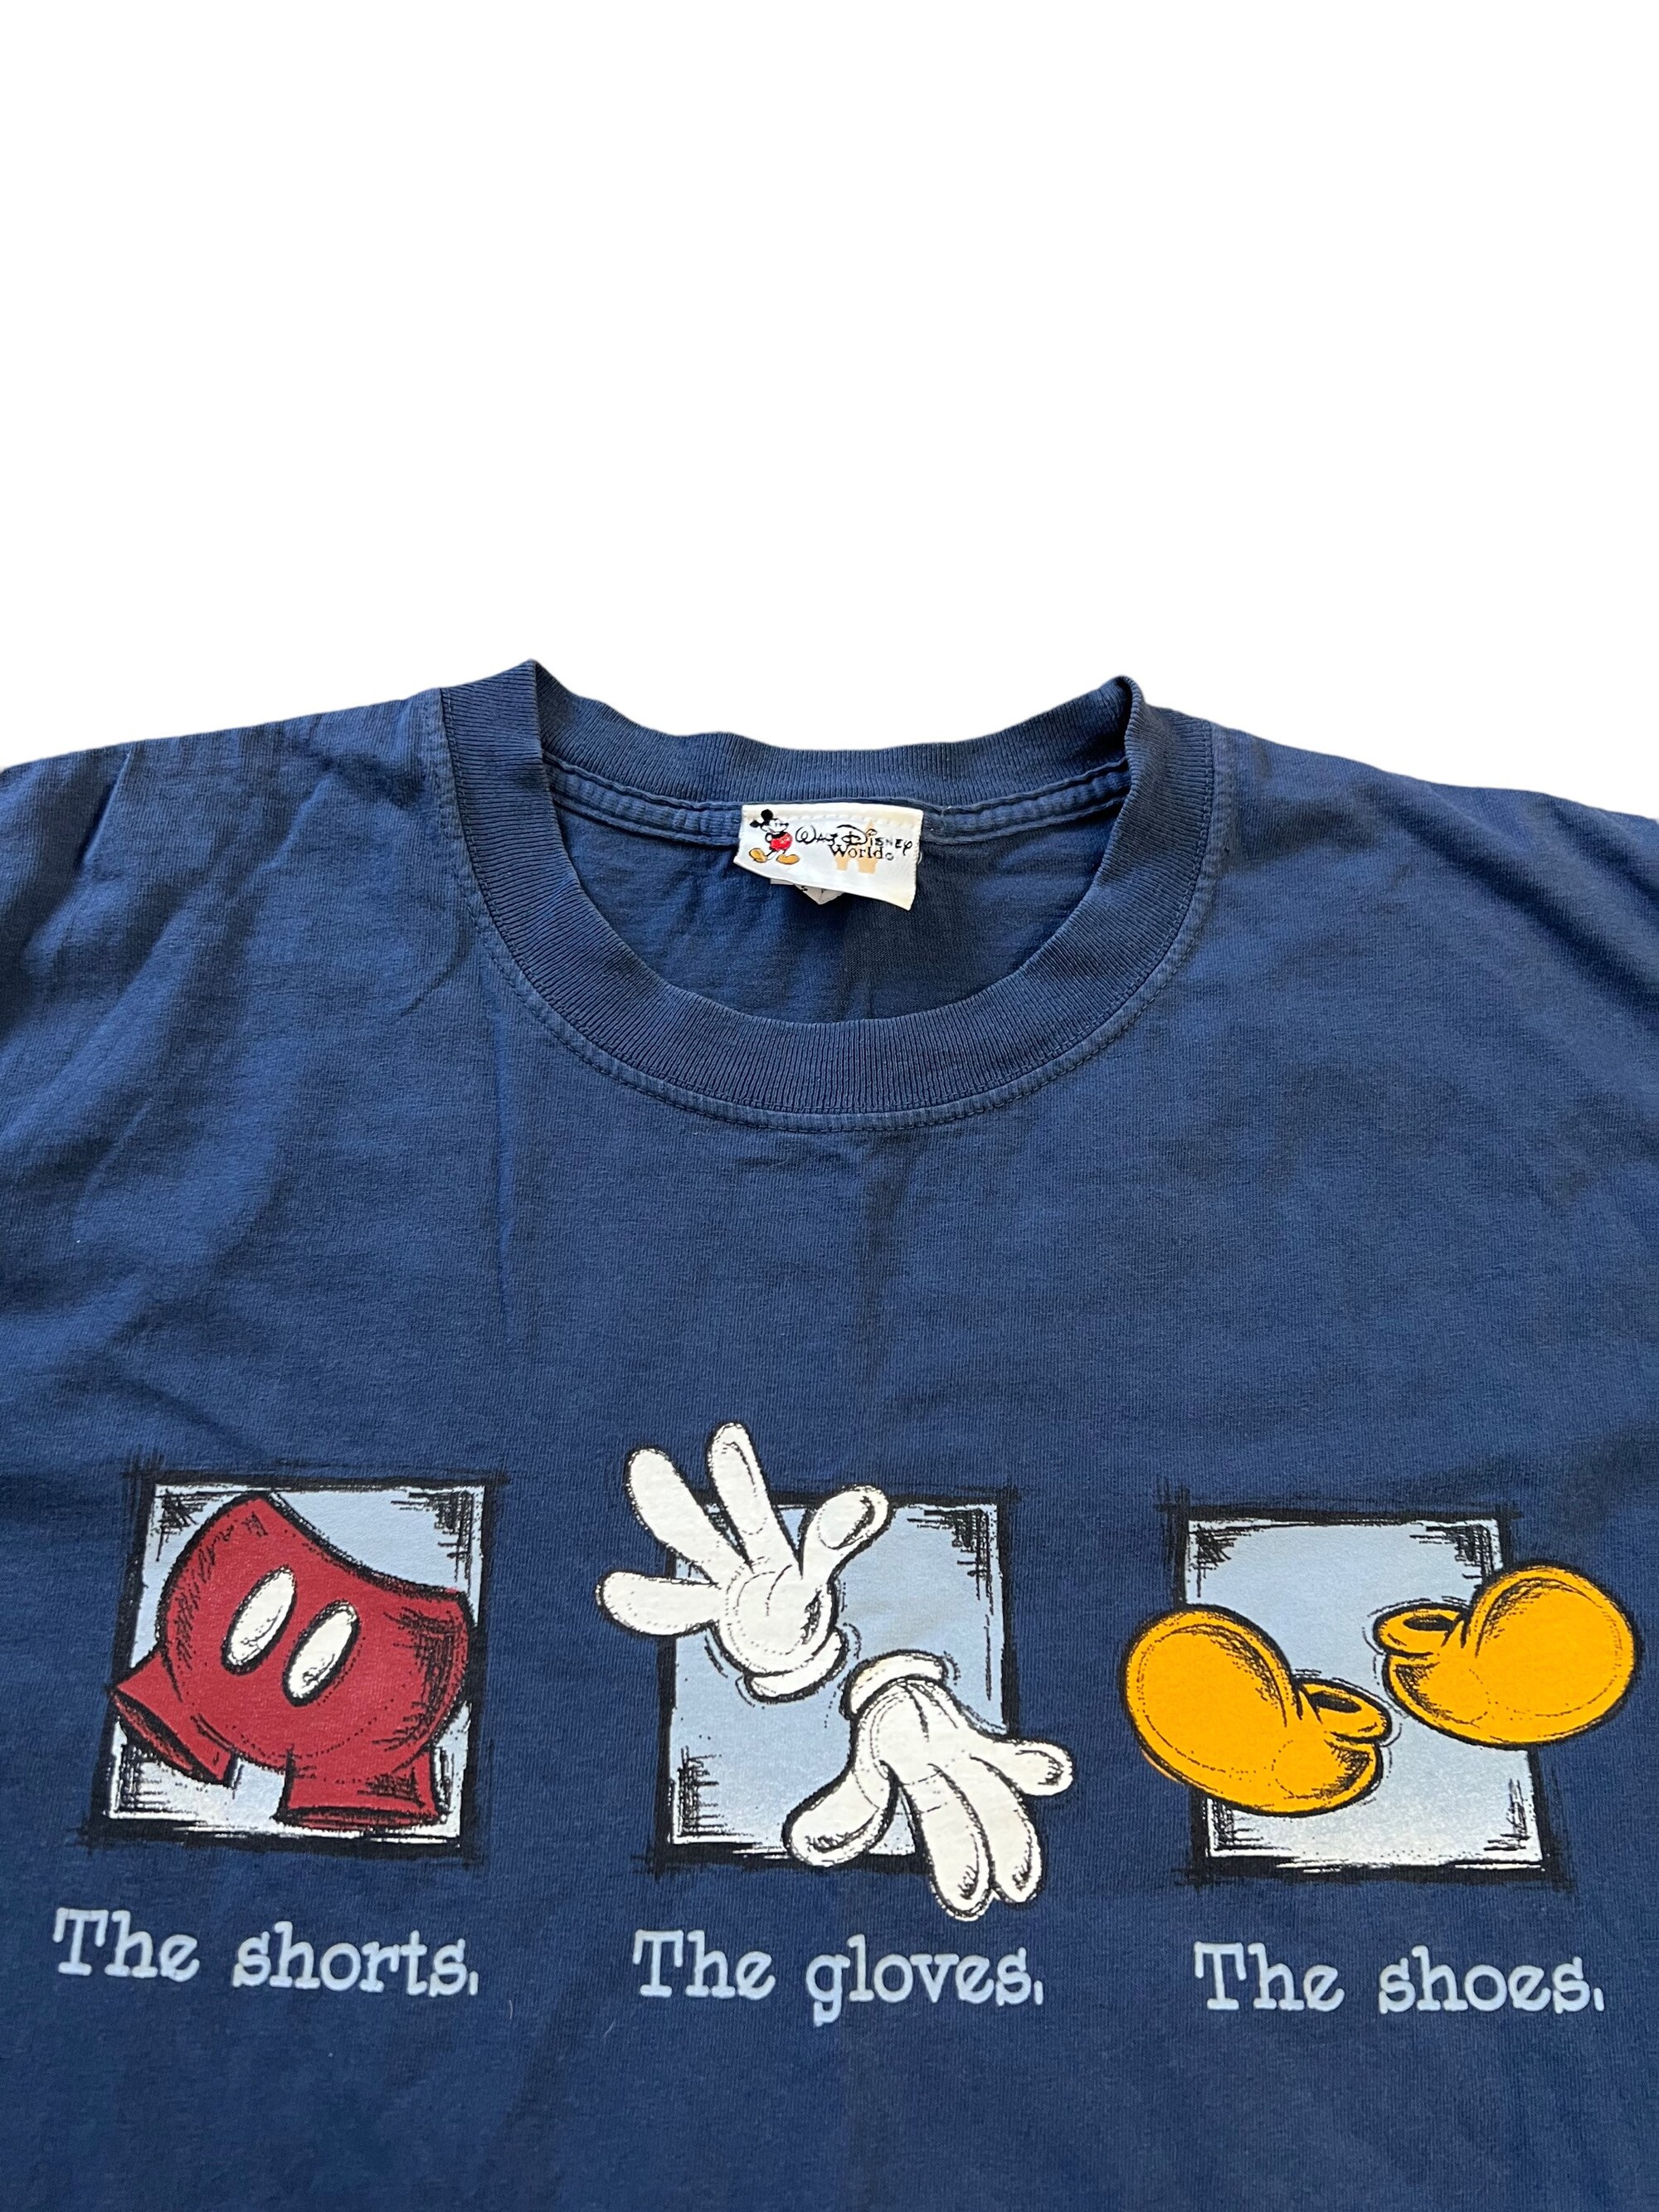 Vintage 90s Mickey Mouse T-Shirt, Disneyland